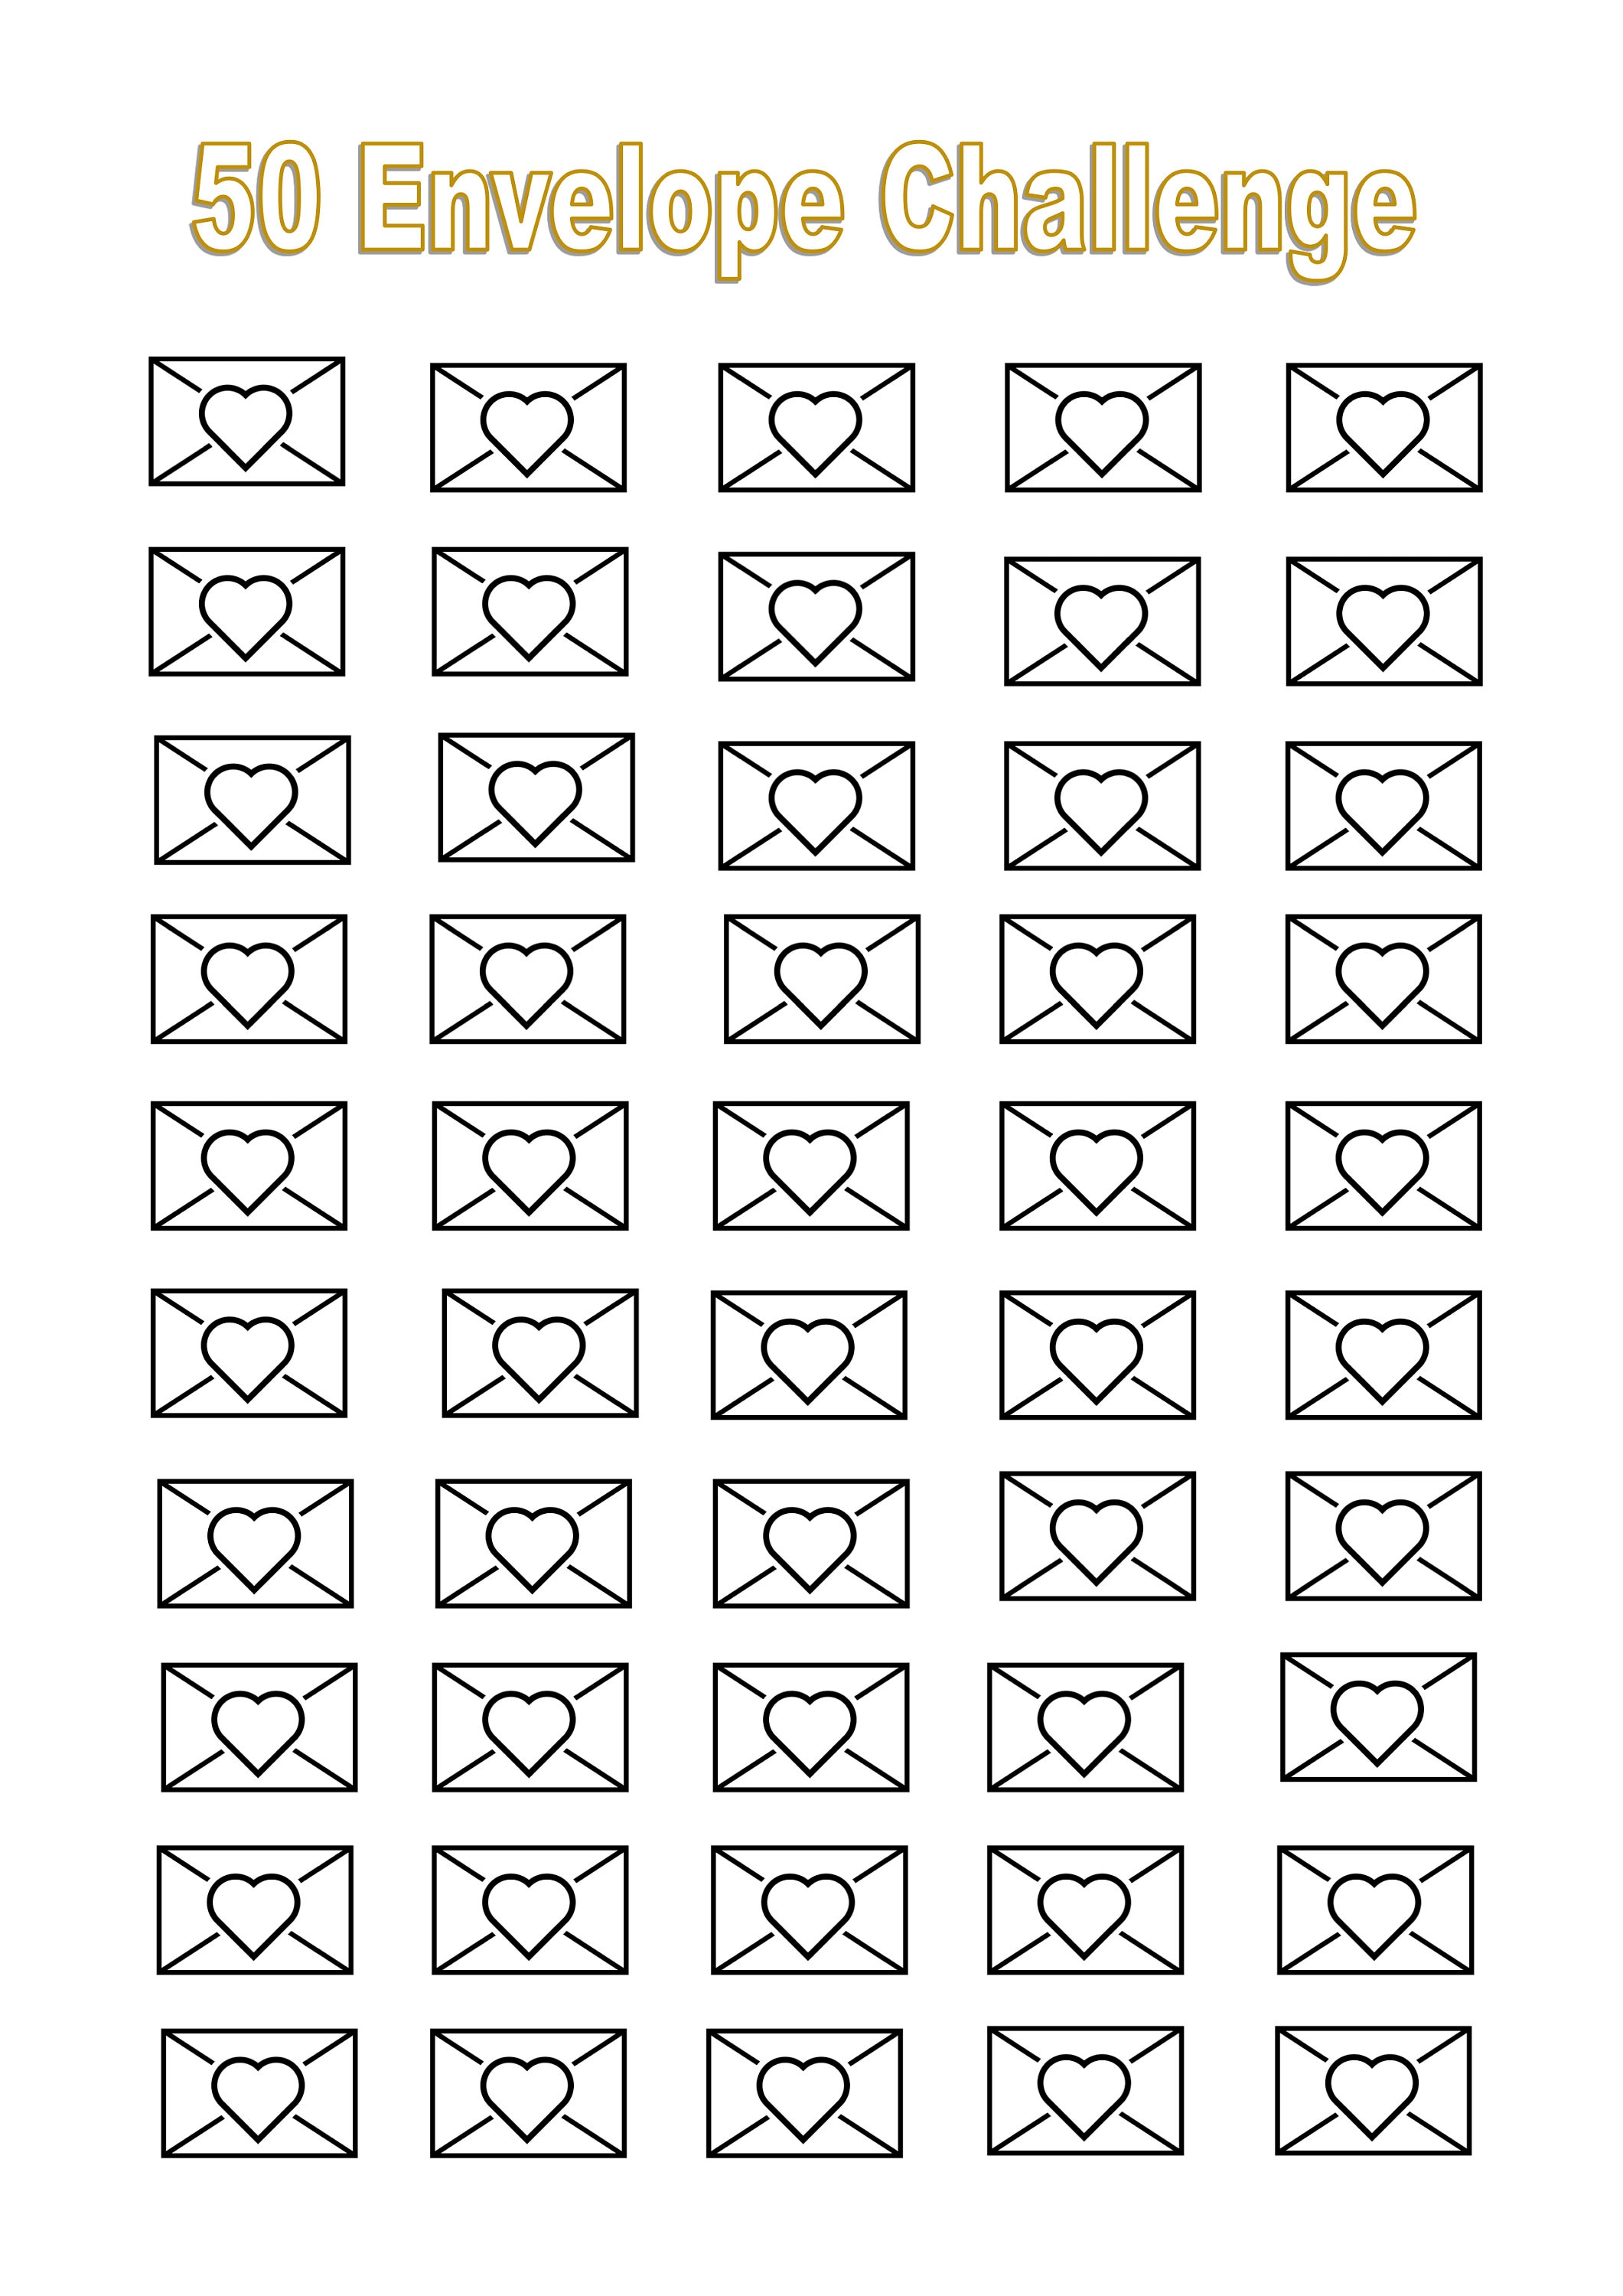 100-envelope-challenge-free-printable